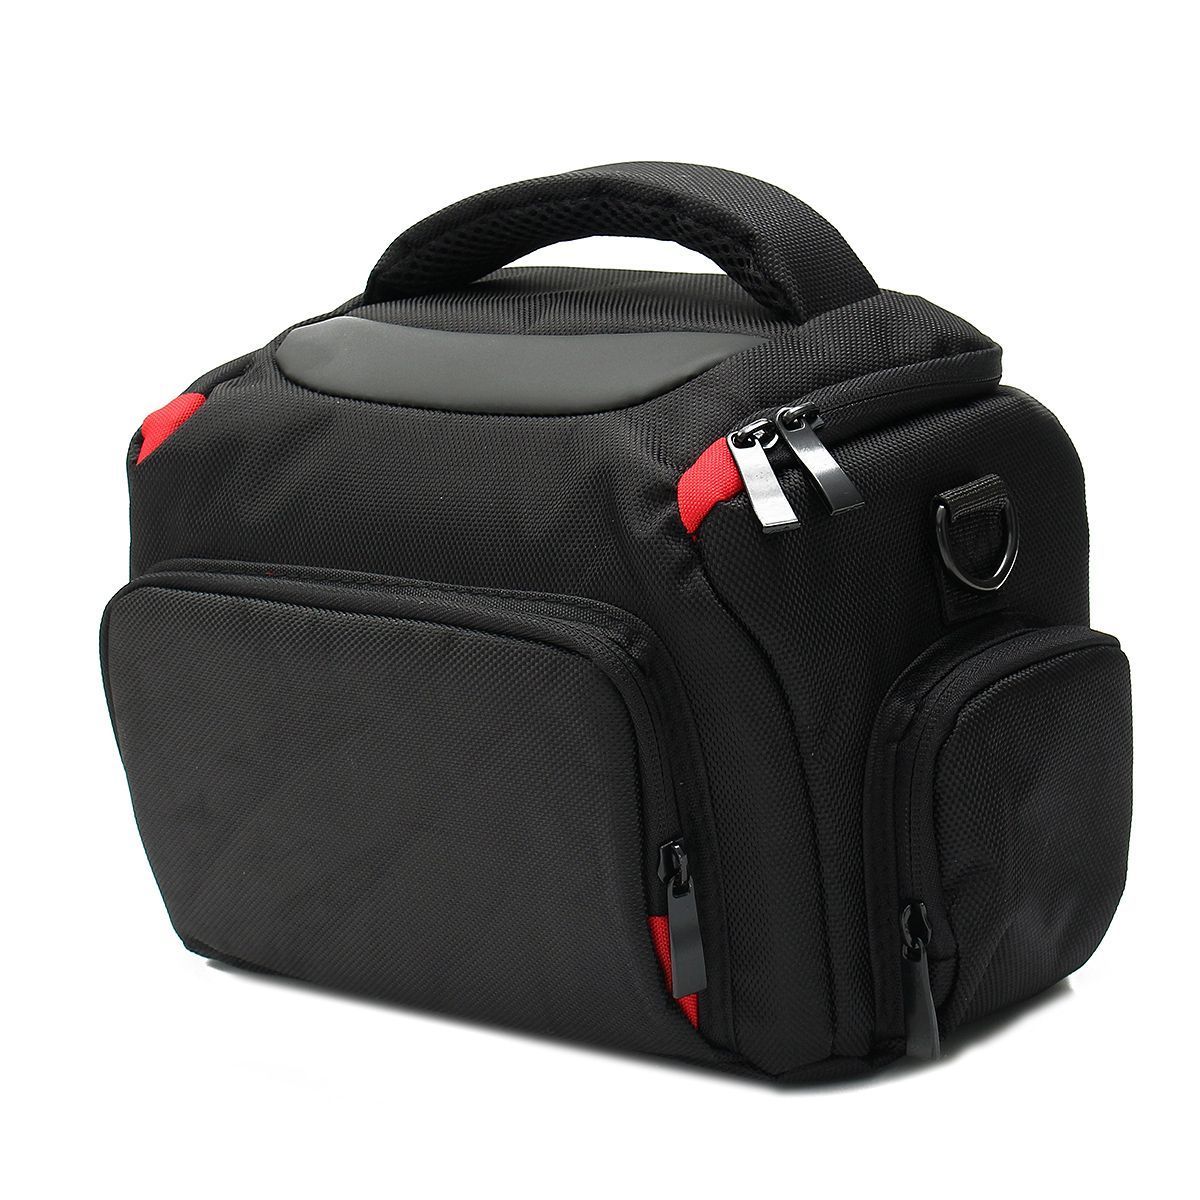 Camera-Storage-Travel-Carry-Bag-with-Rain-Cover-Strap-for-DSLR-SLR-Camera-Camera-Lens-Flash-1632987